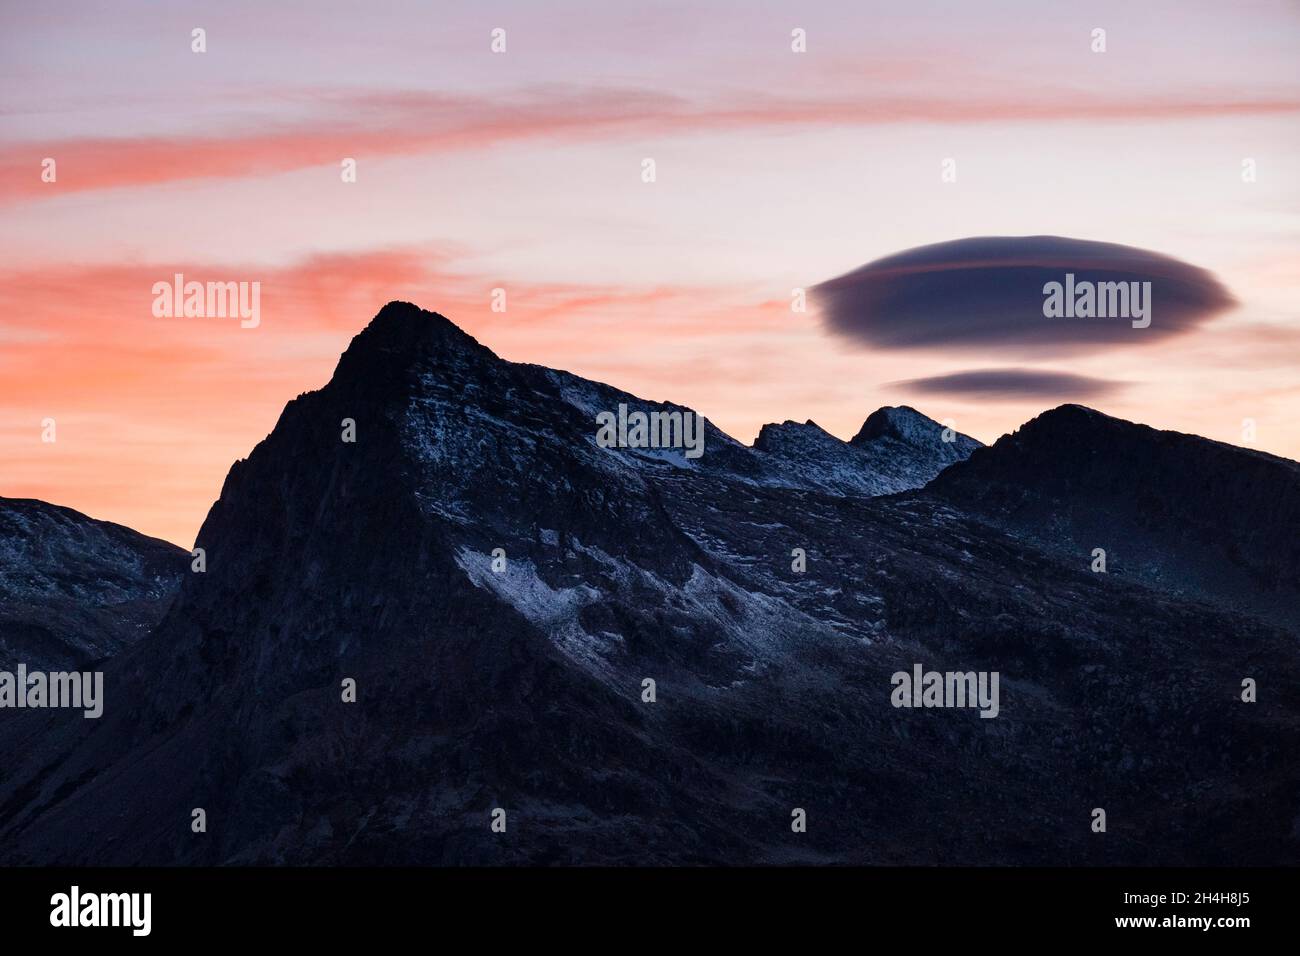 Lenticularis cloud over Lagorai range, sunset, Parco Naturale Paneveggio Pale di San Martino, Rolle Pass, Trentino, Italy Stock Photo